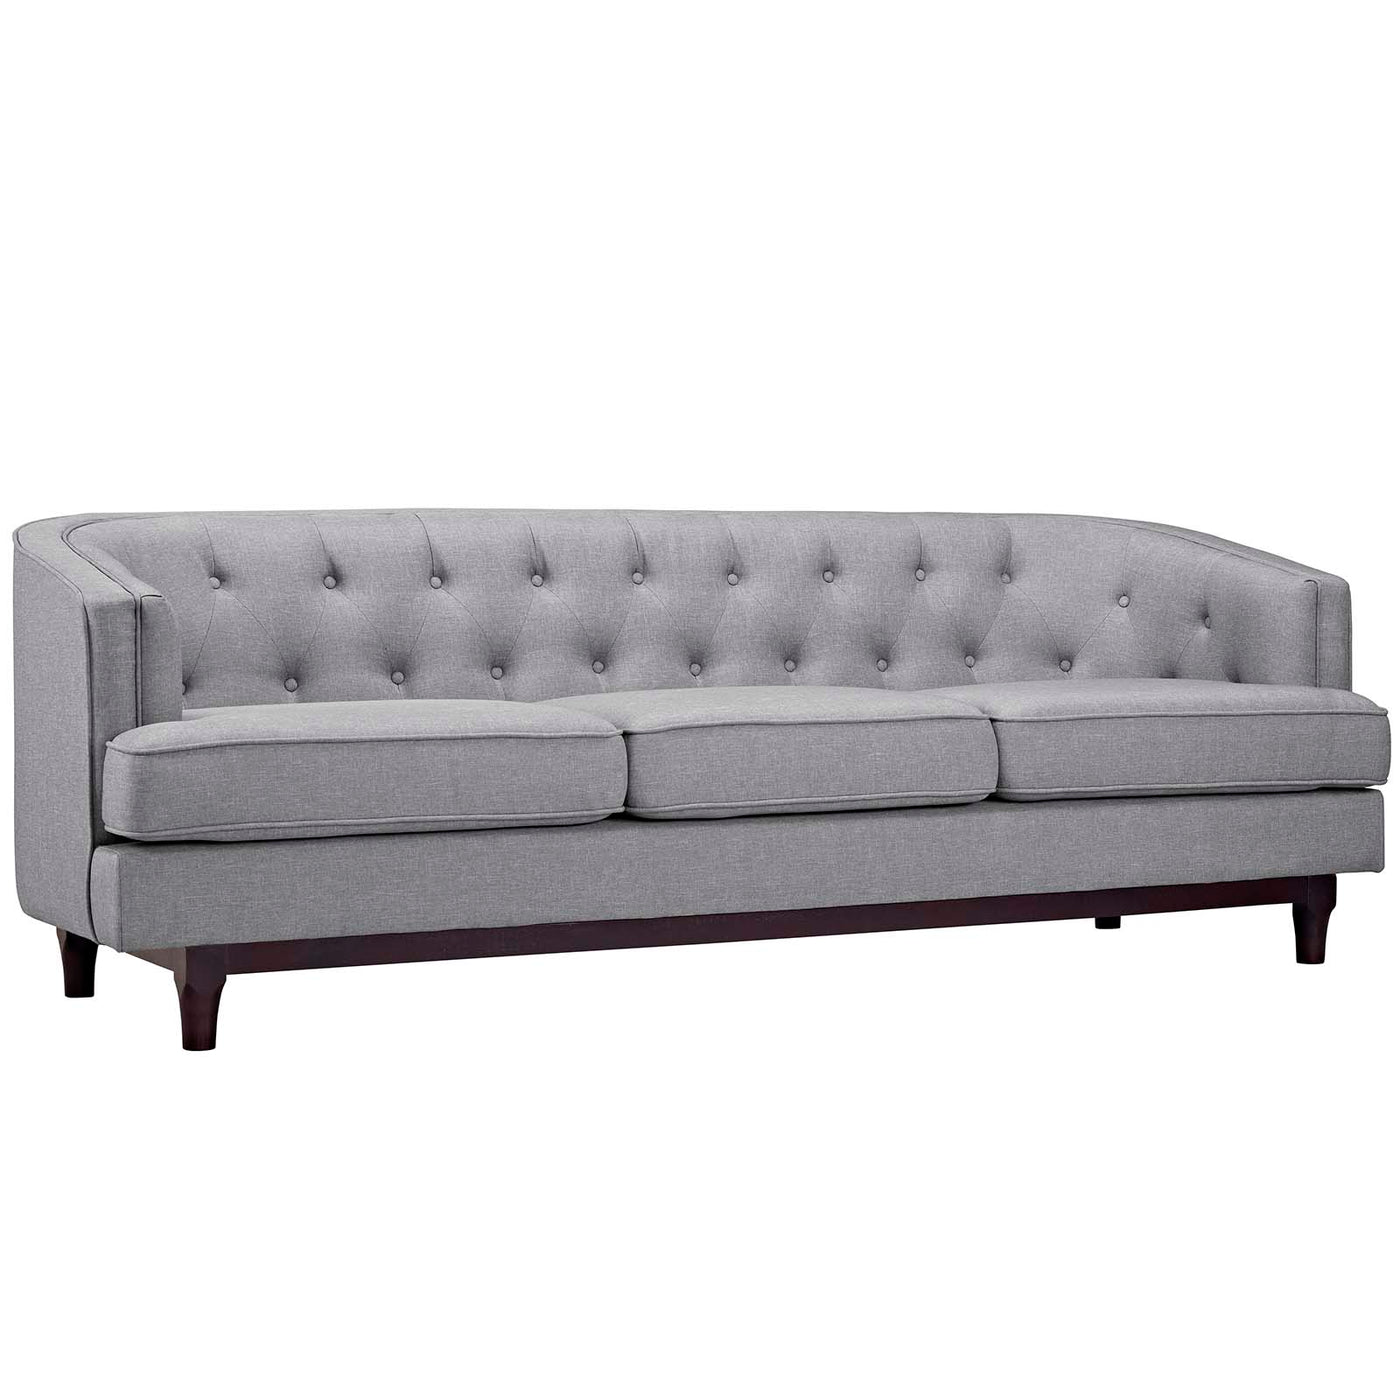 Coast Upholstered Fabric Sofa